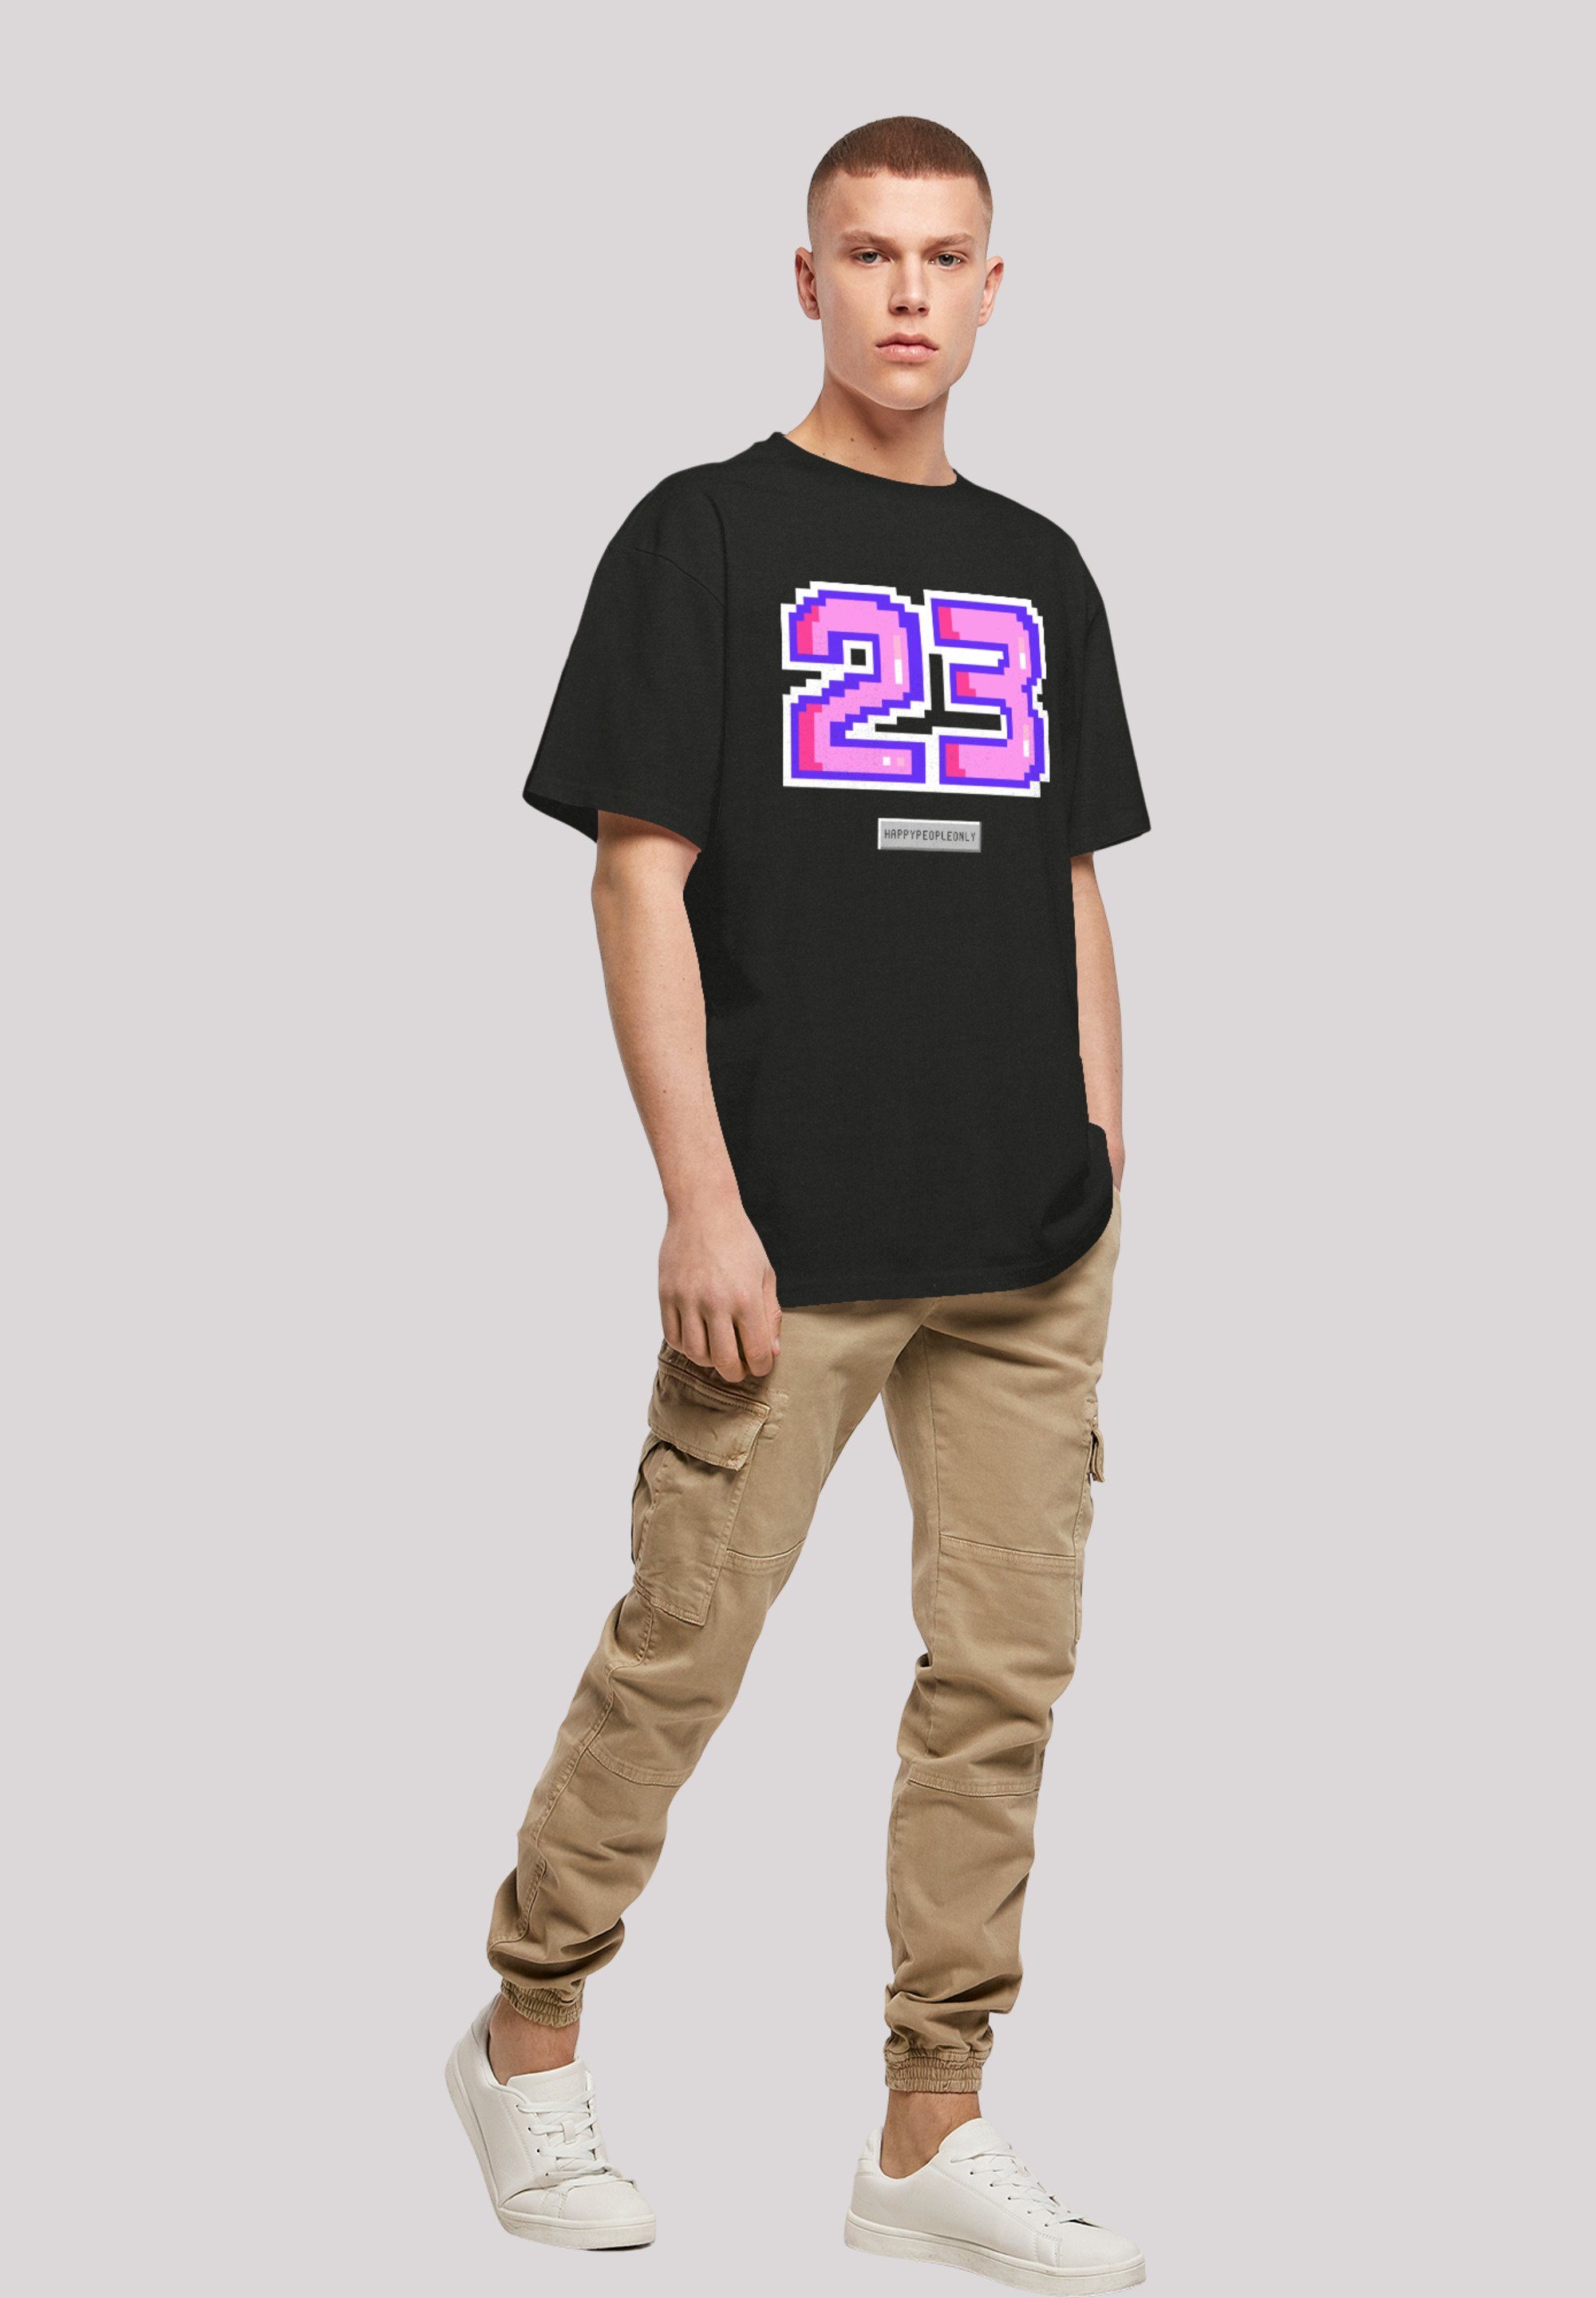 Pixel F4NT4STIC 23 Print T-Shirt schwarz pink